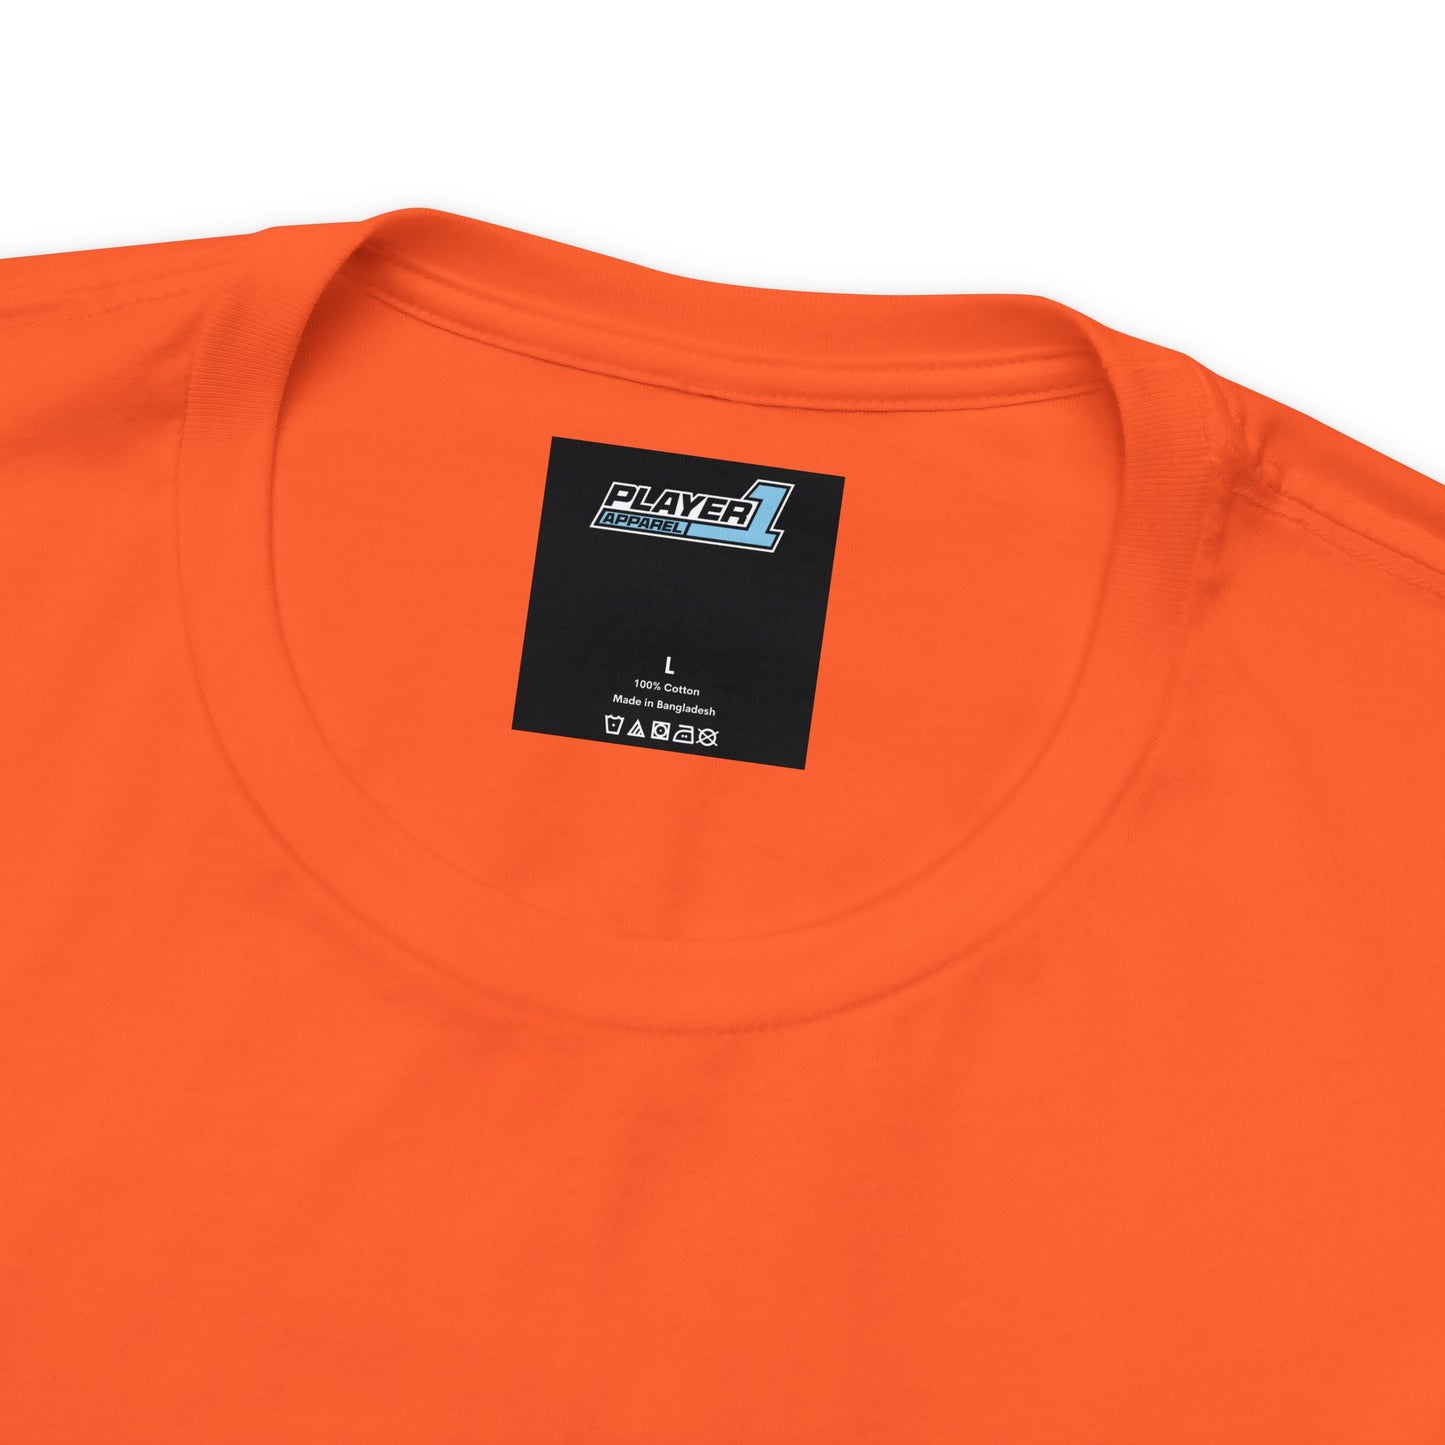 IceMan Keep Spreading Positivity Unisex T-shirt